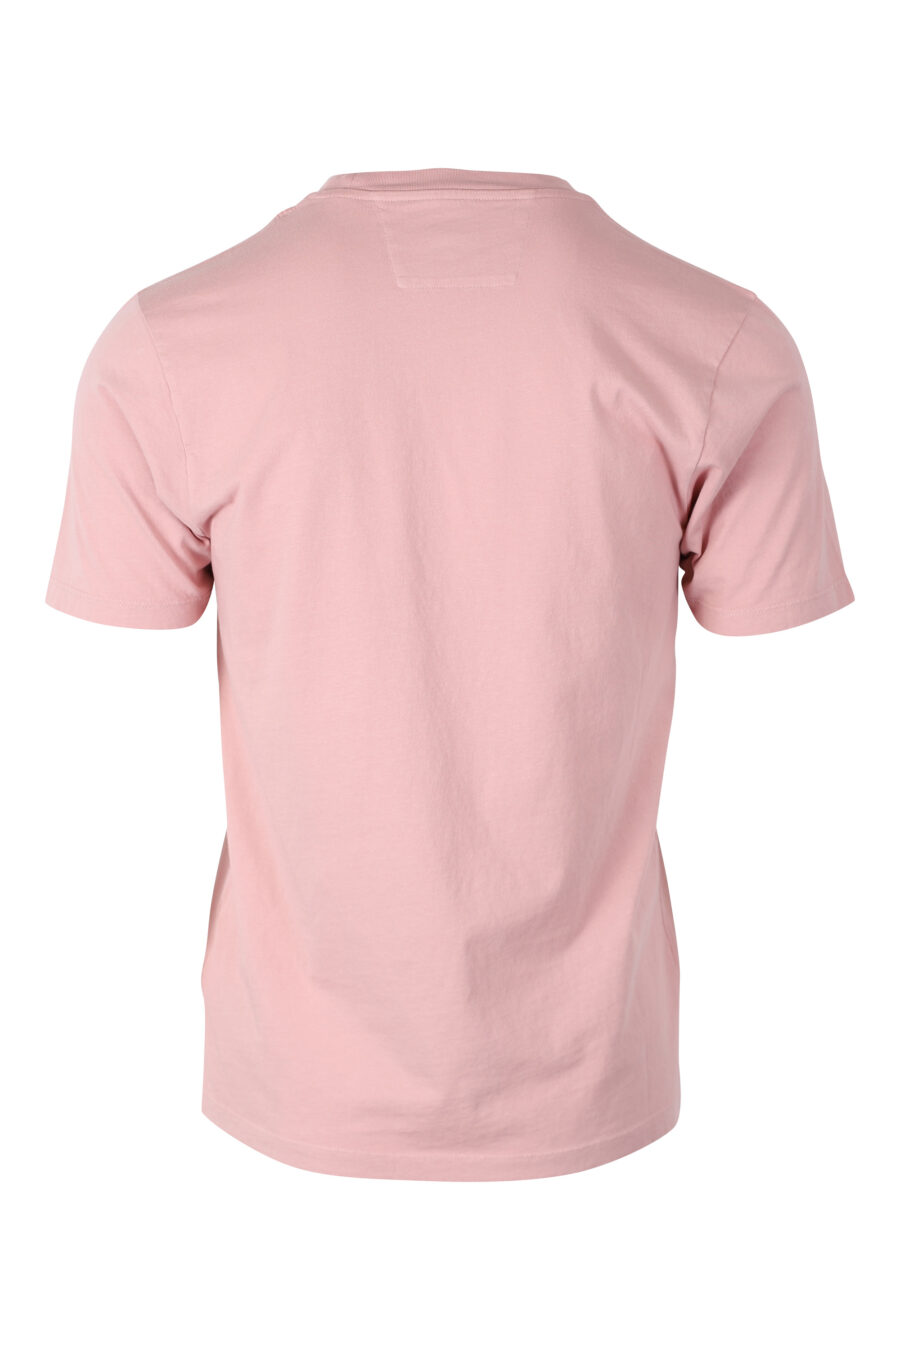 T-shirt rose avec maxilogo "spray" - IMG 2403